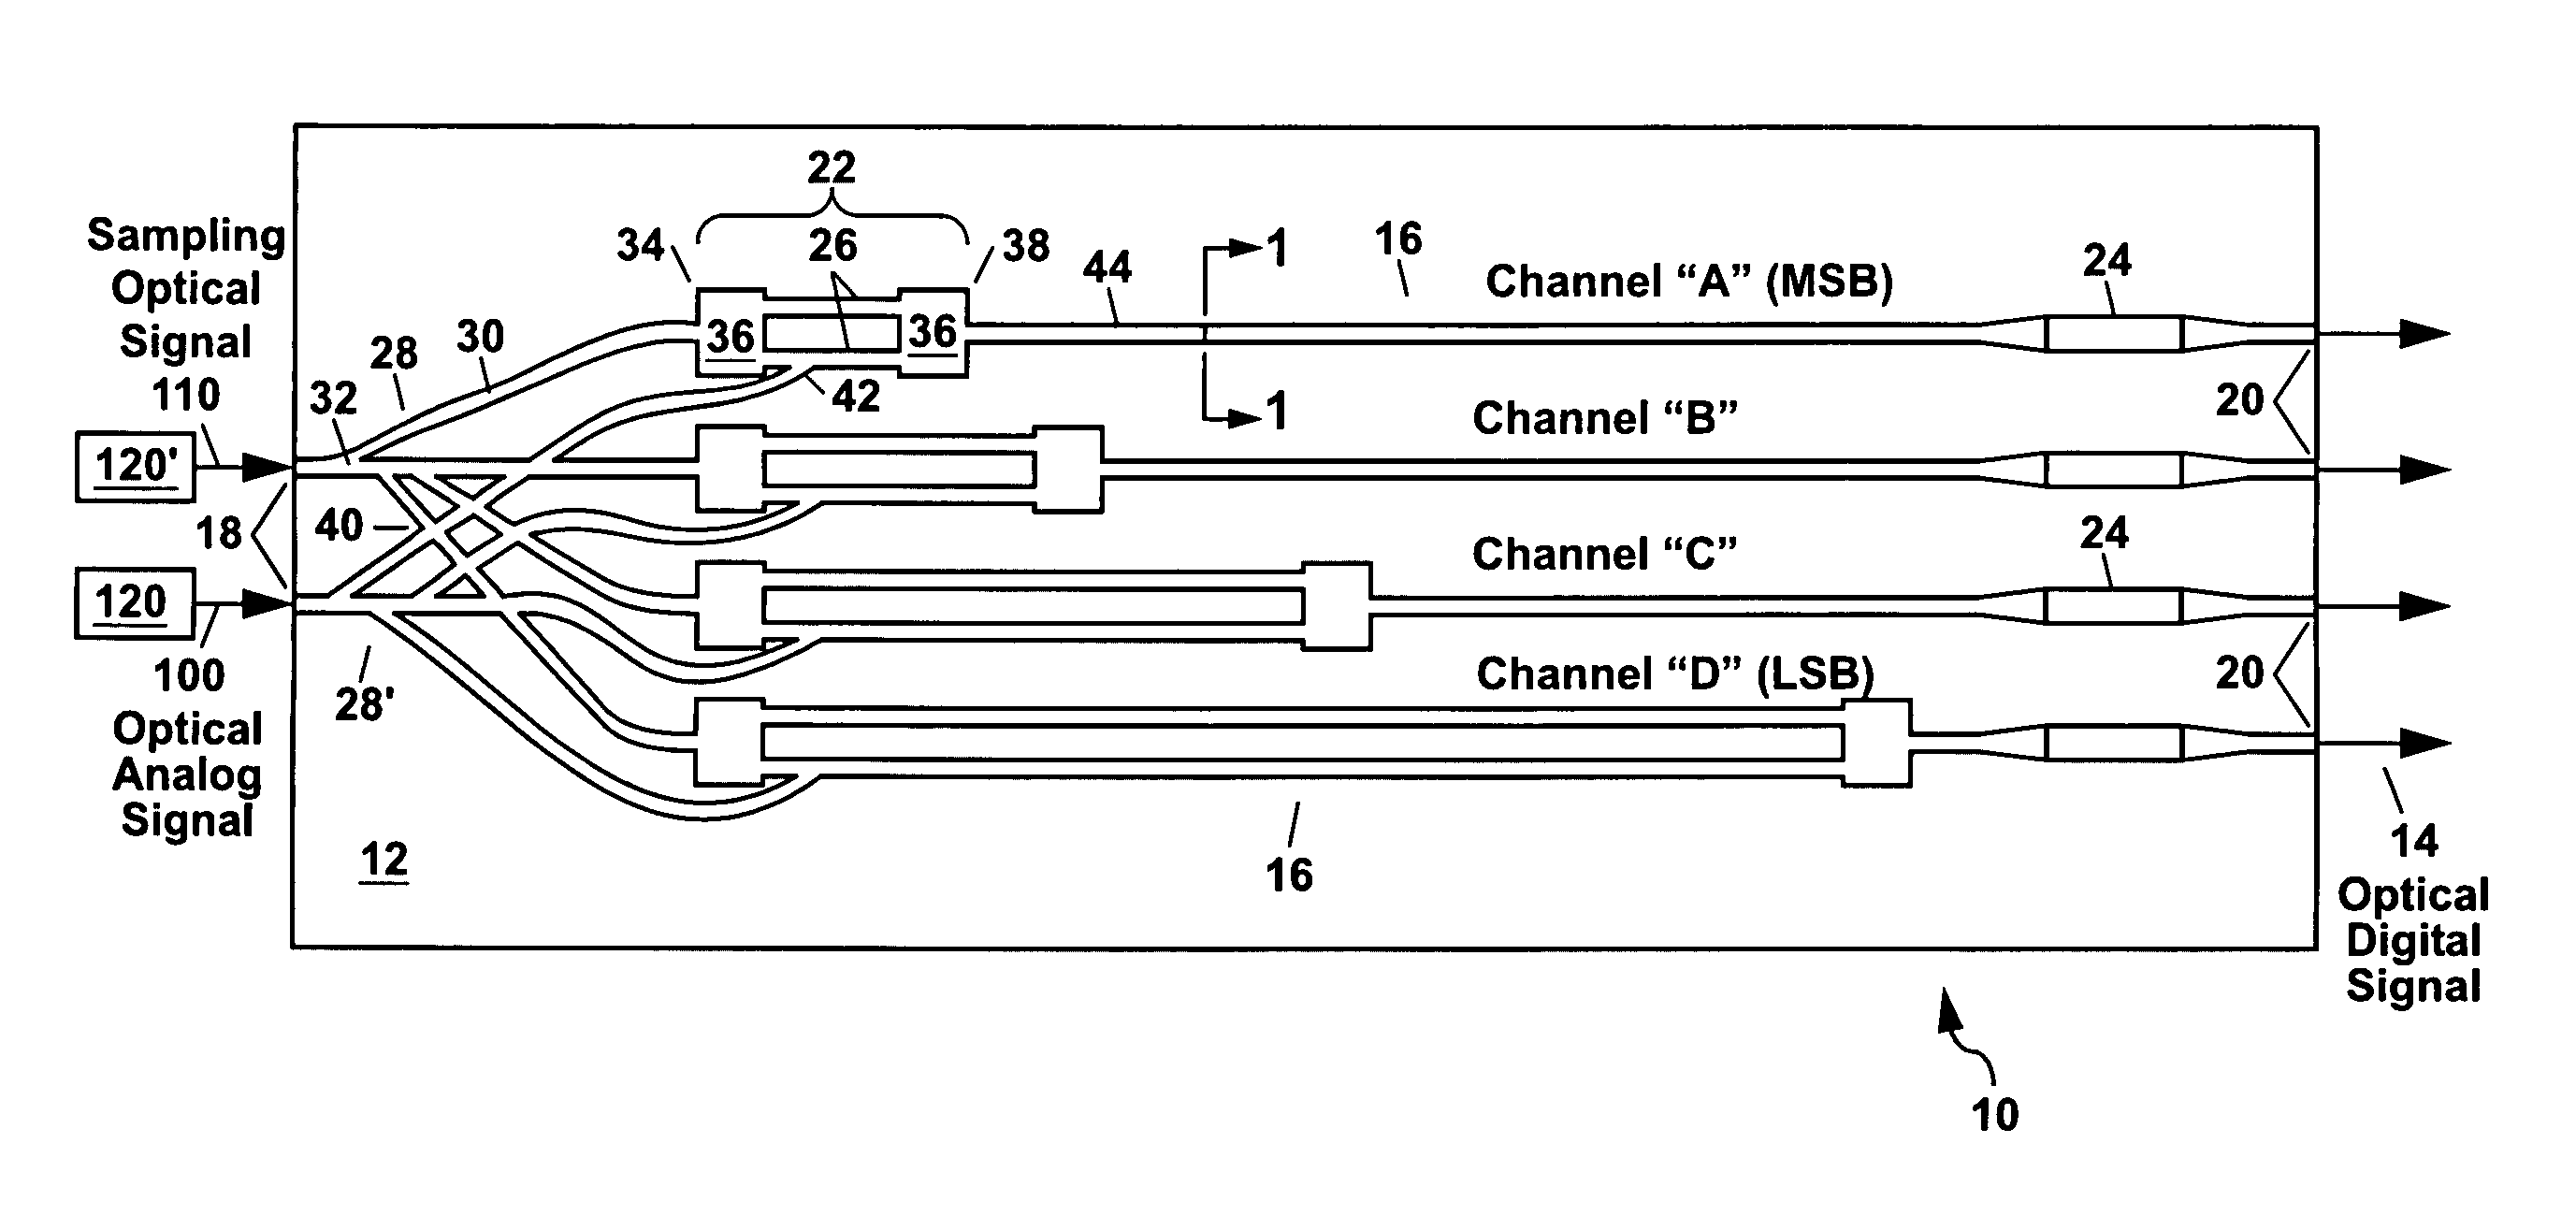 Optical analog-to-digital converter